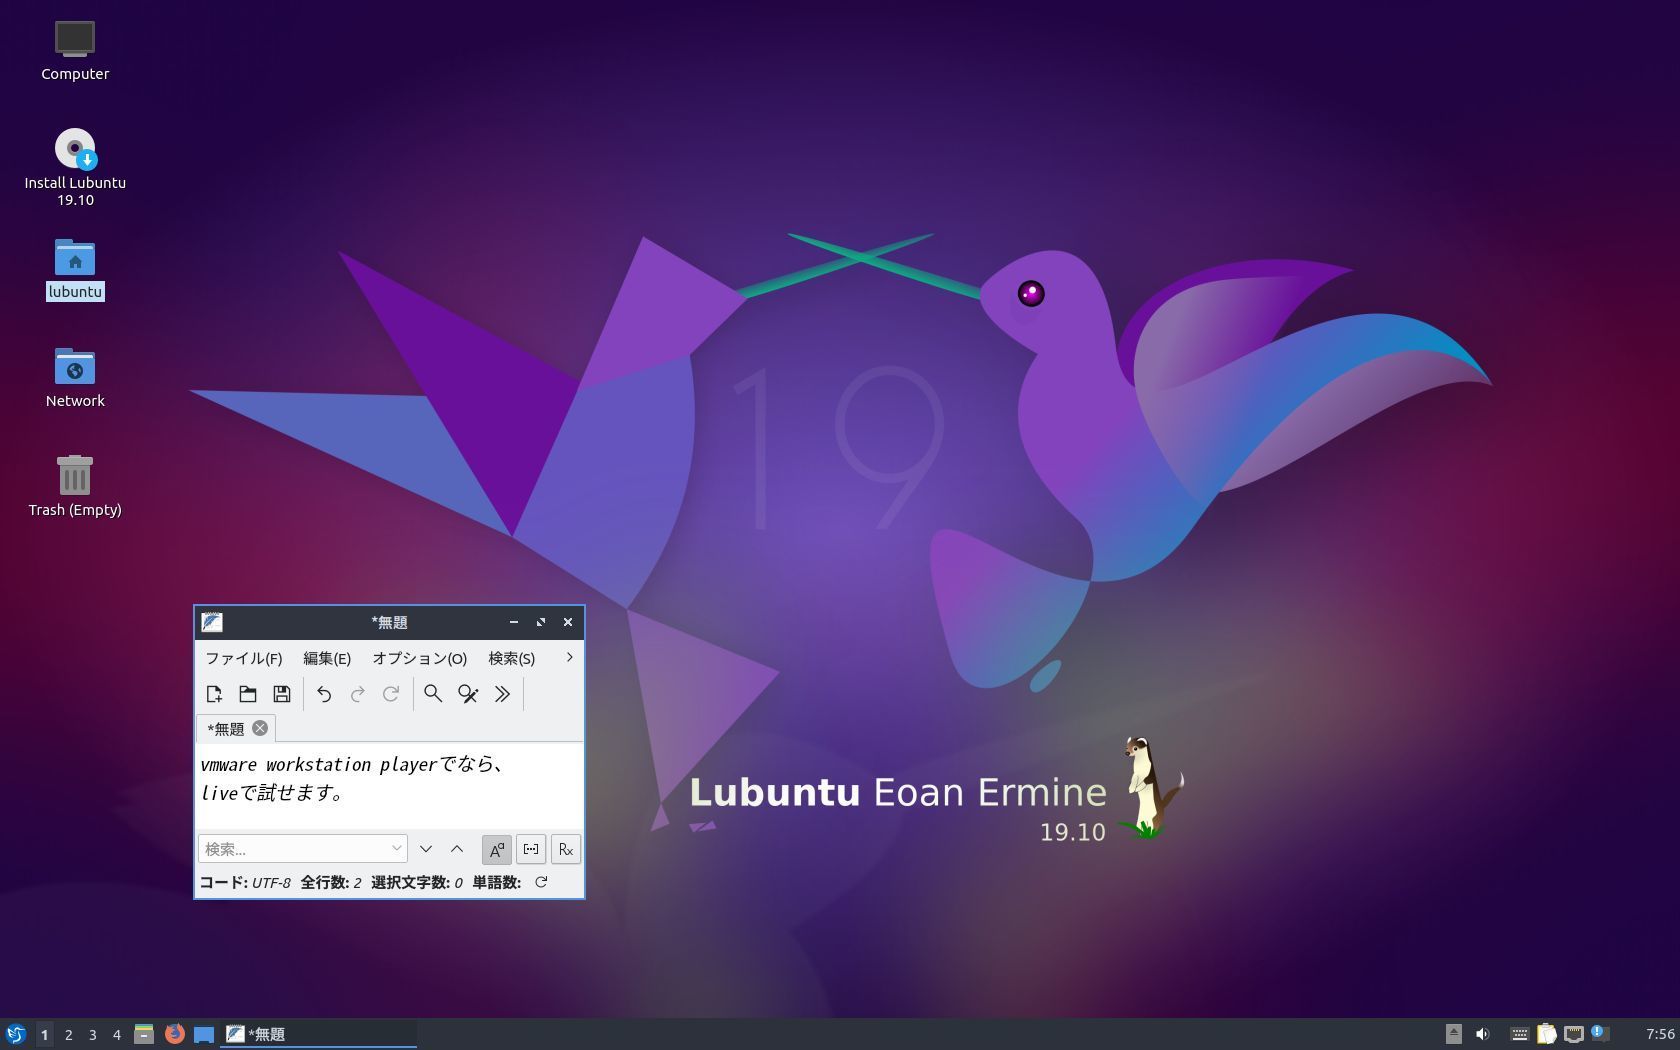 Lubuntu 19 10 Desktop Amd64 Iso Lxqt Vmware Workstation Player15 5 0 Sparkylinux 5 9 X86 64 Xfce ゆったりとlinux